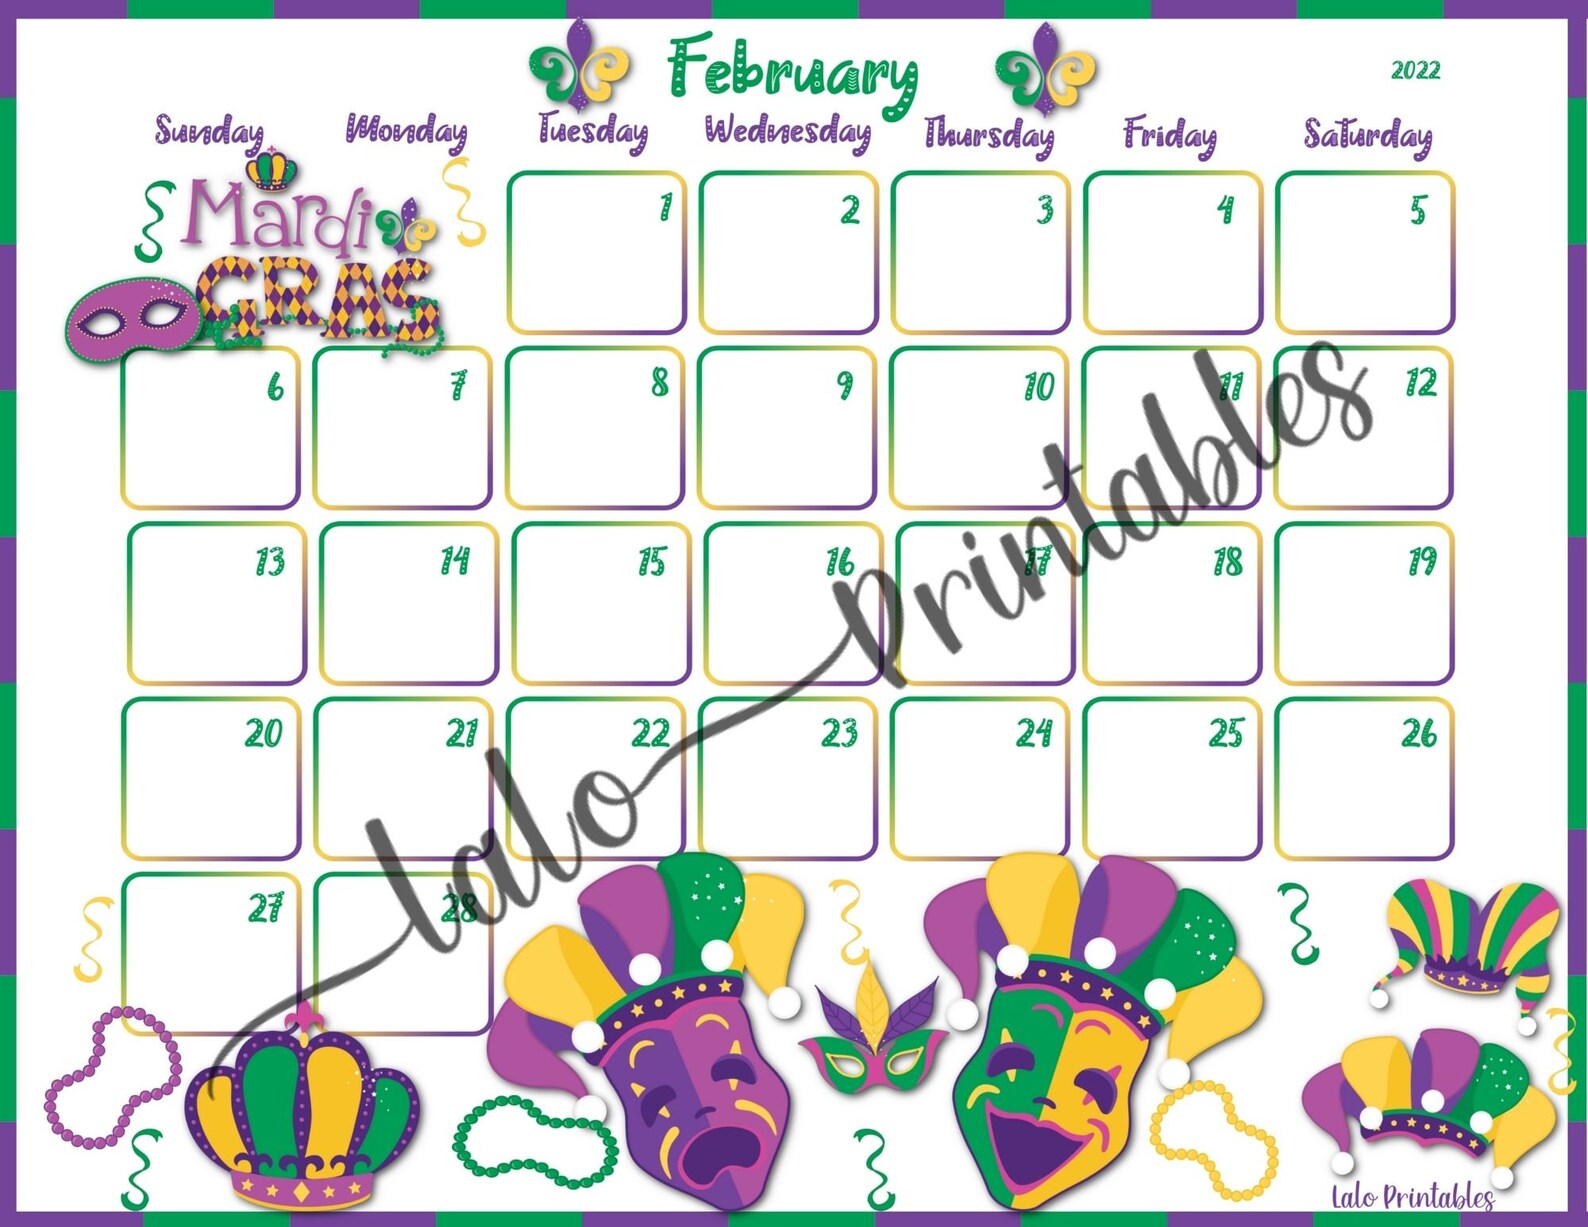 Mardi Gras February 2022 Calendar Month Instant Download Etsy